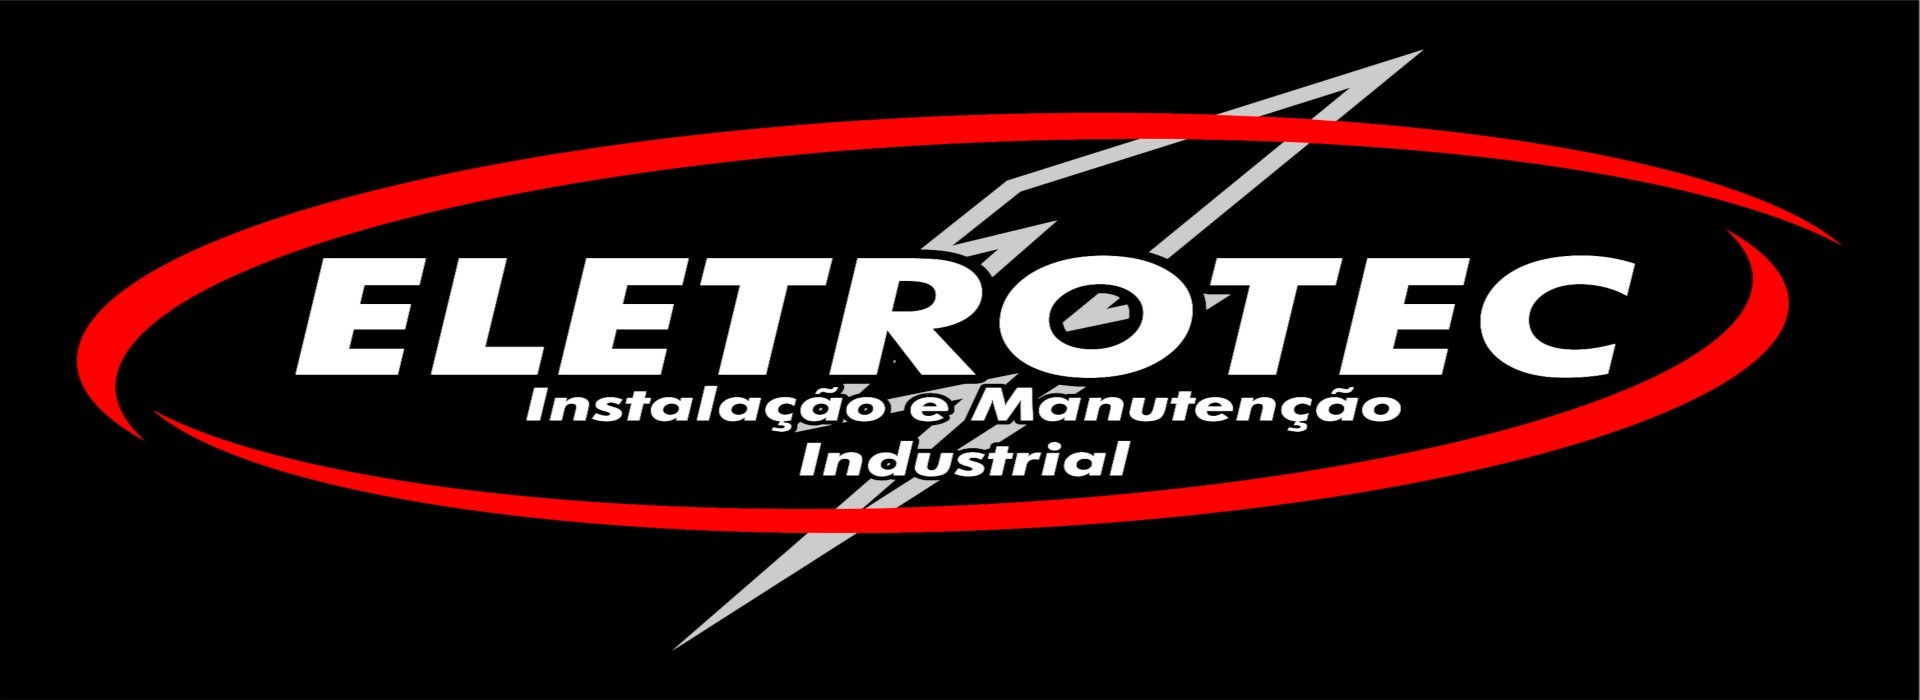 Logomarca Eletrotec